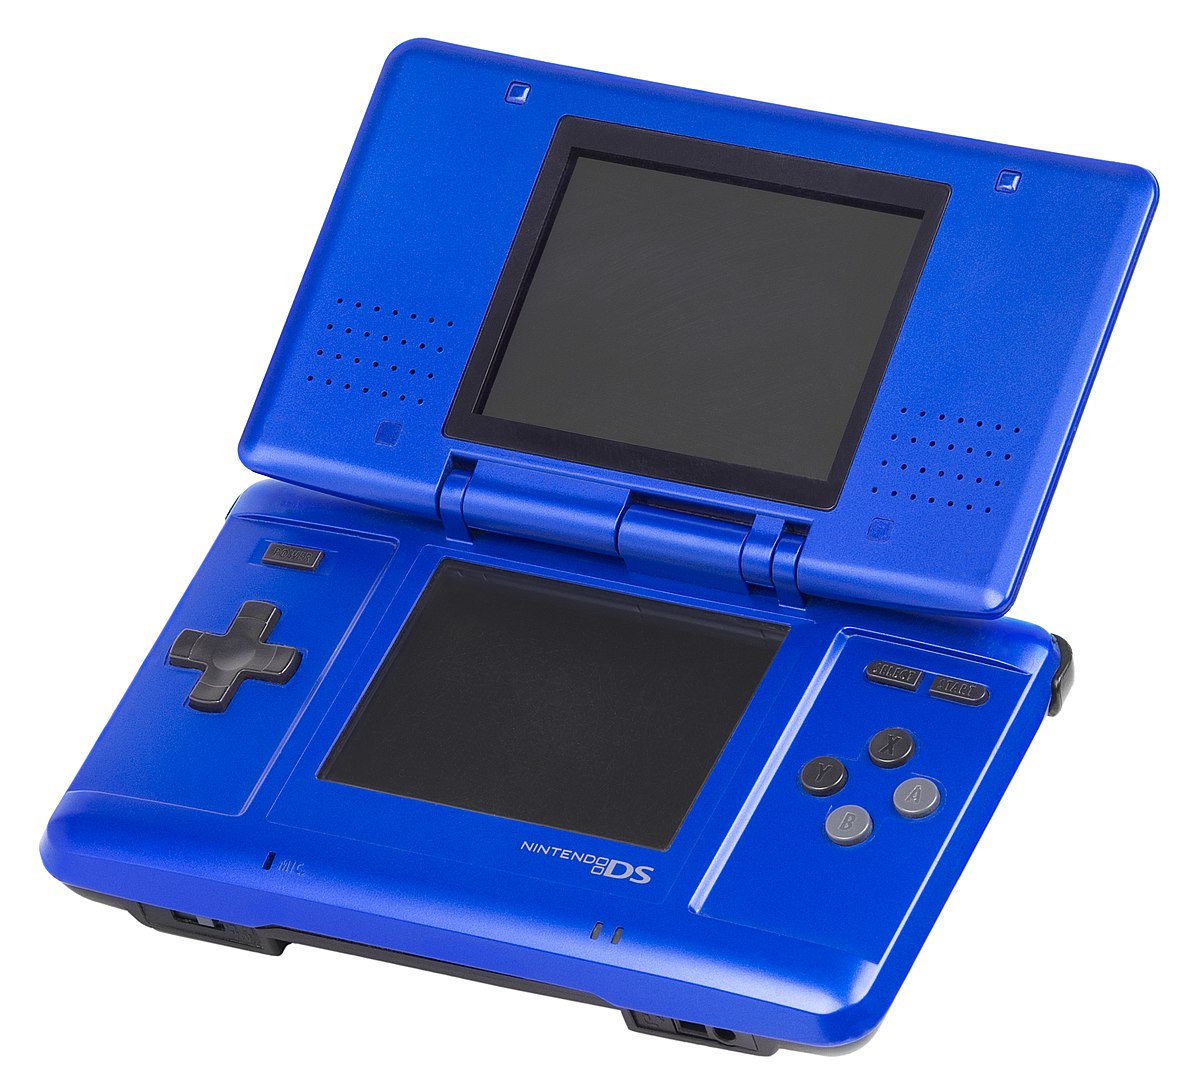 A cobalt blue Nintendo DS.